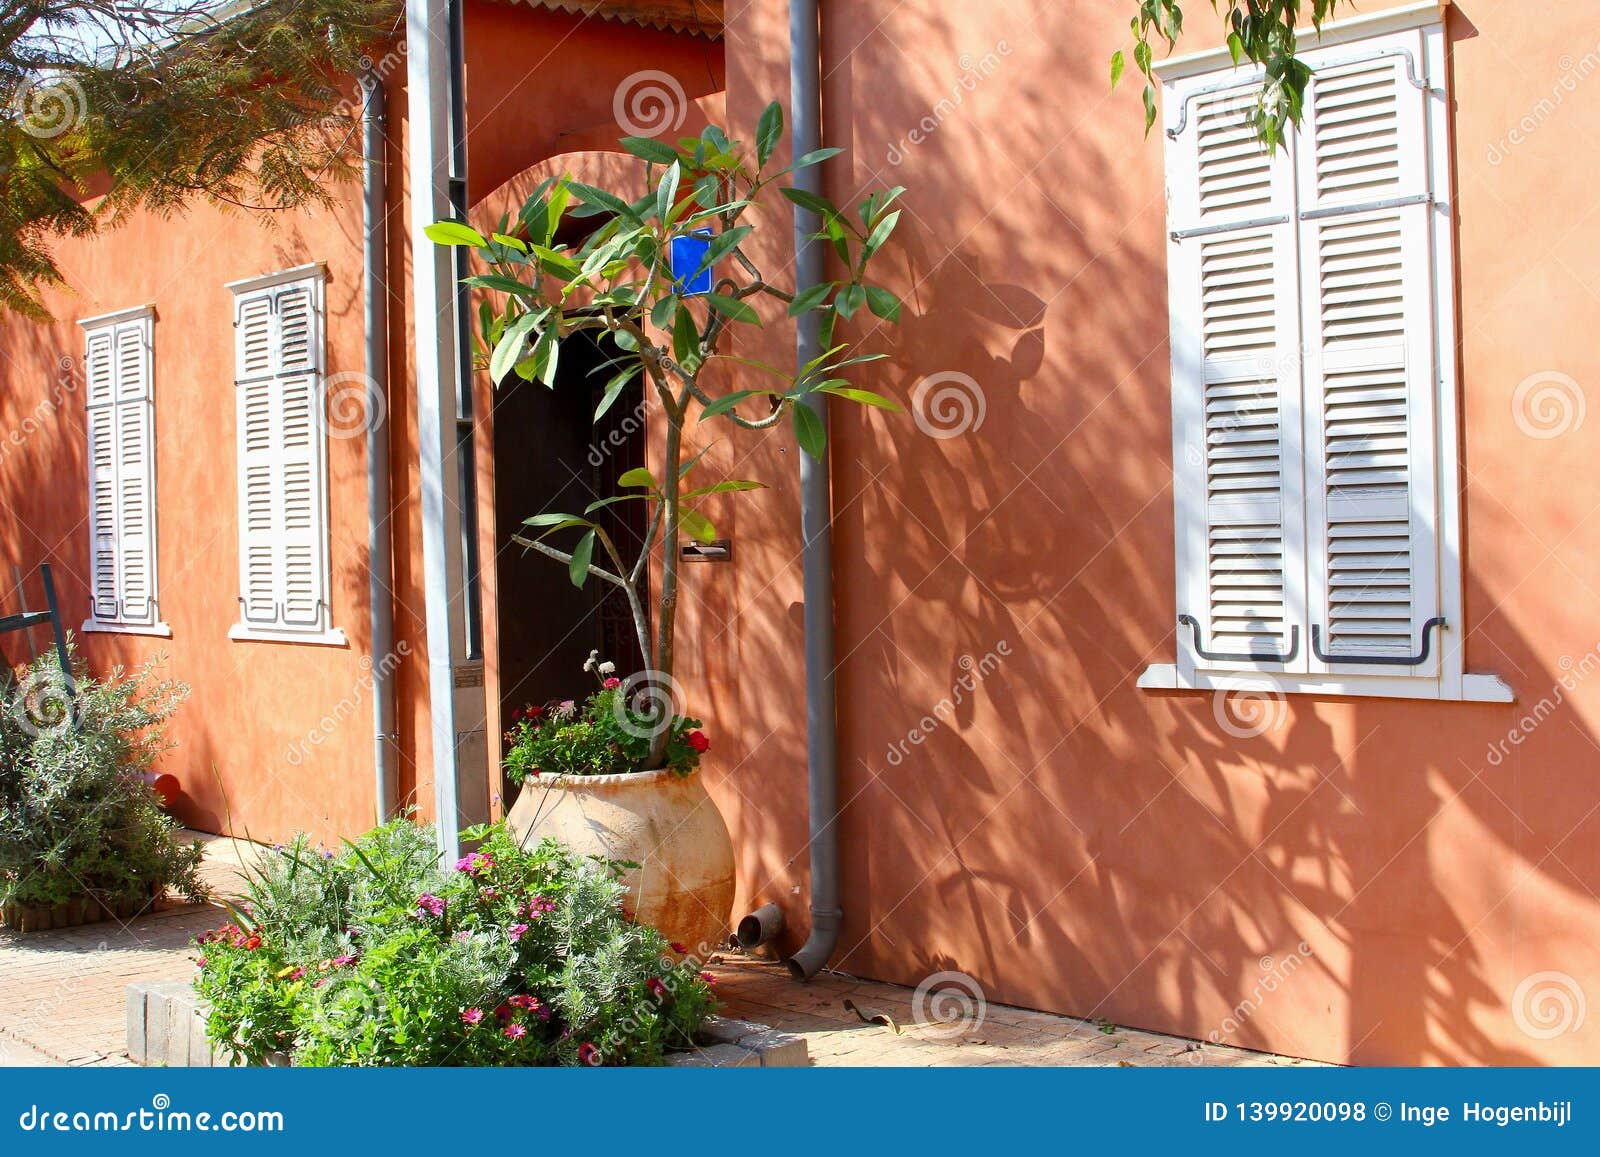 terra cotta wall house shutters garden plants, neve tzedek, tel aviv